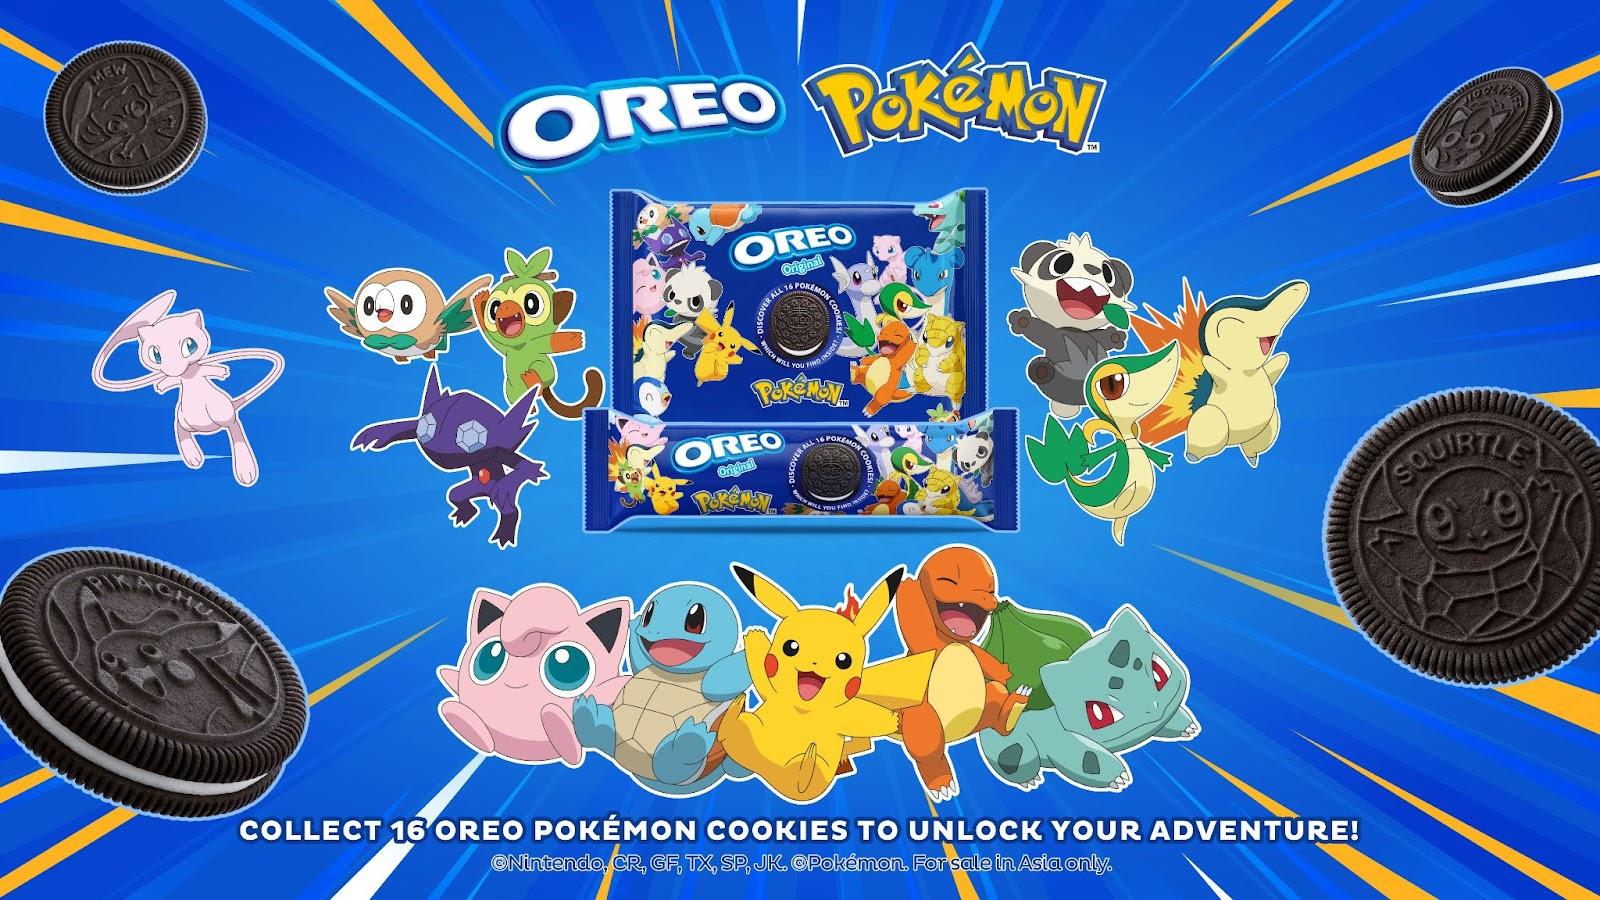 Oreo pokémon collection launch poster